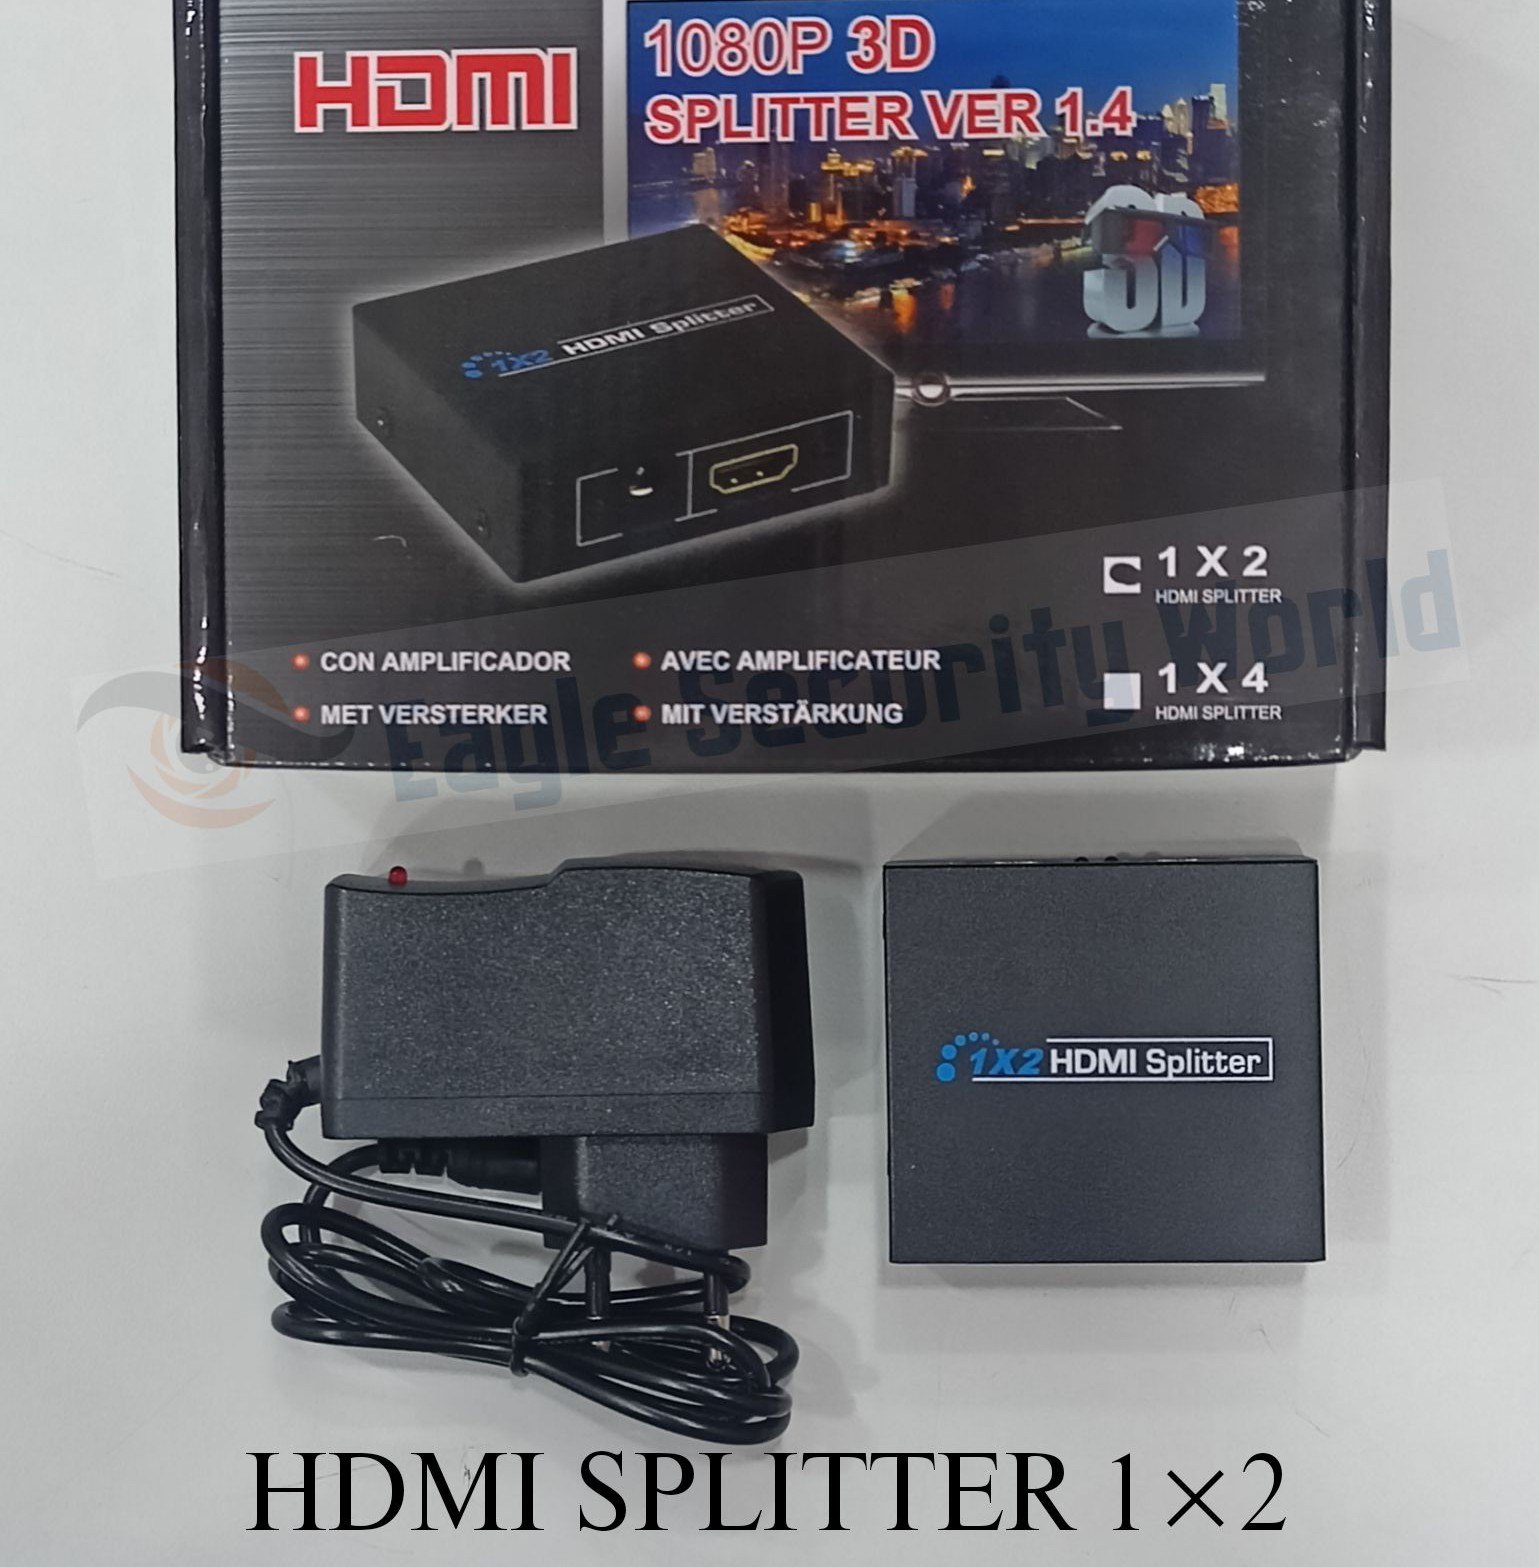 HDMI 1080P 3D SPLITTER VER 1.2